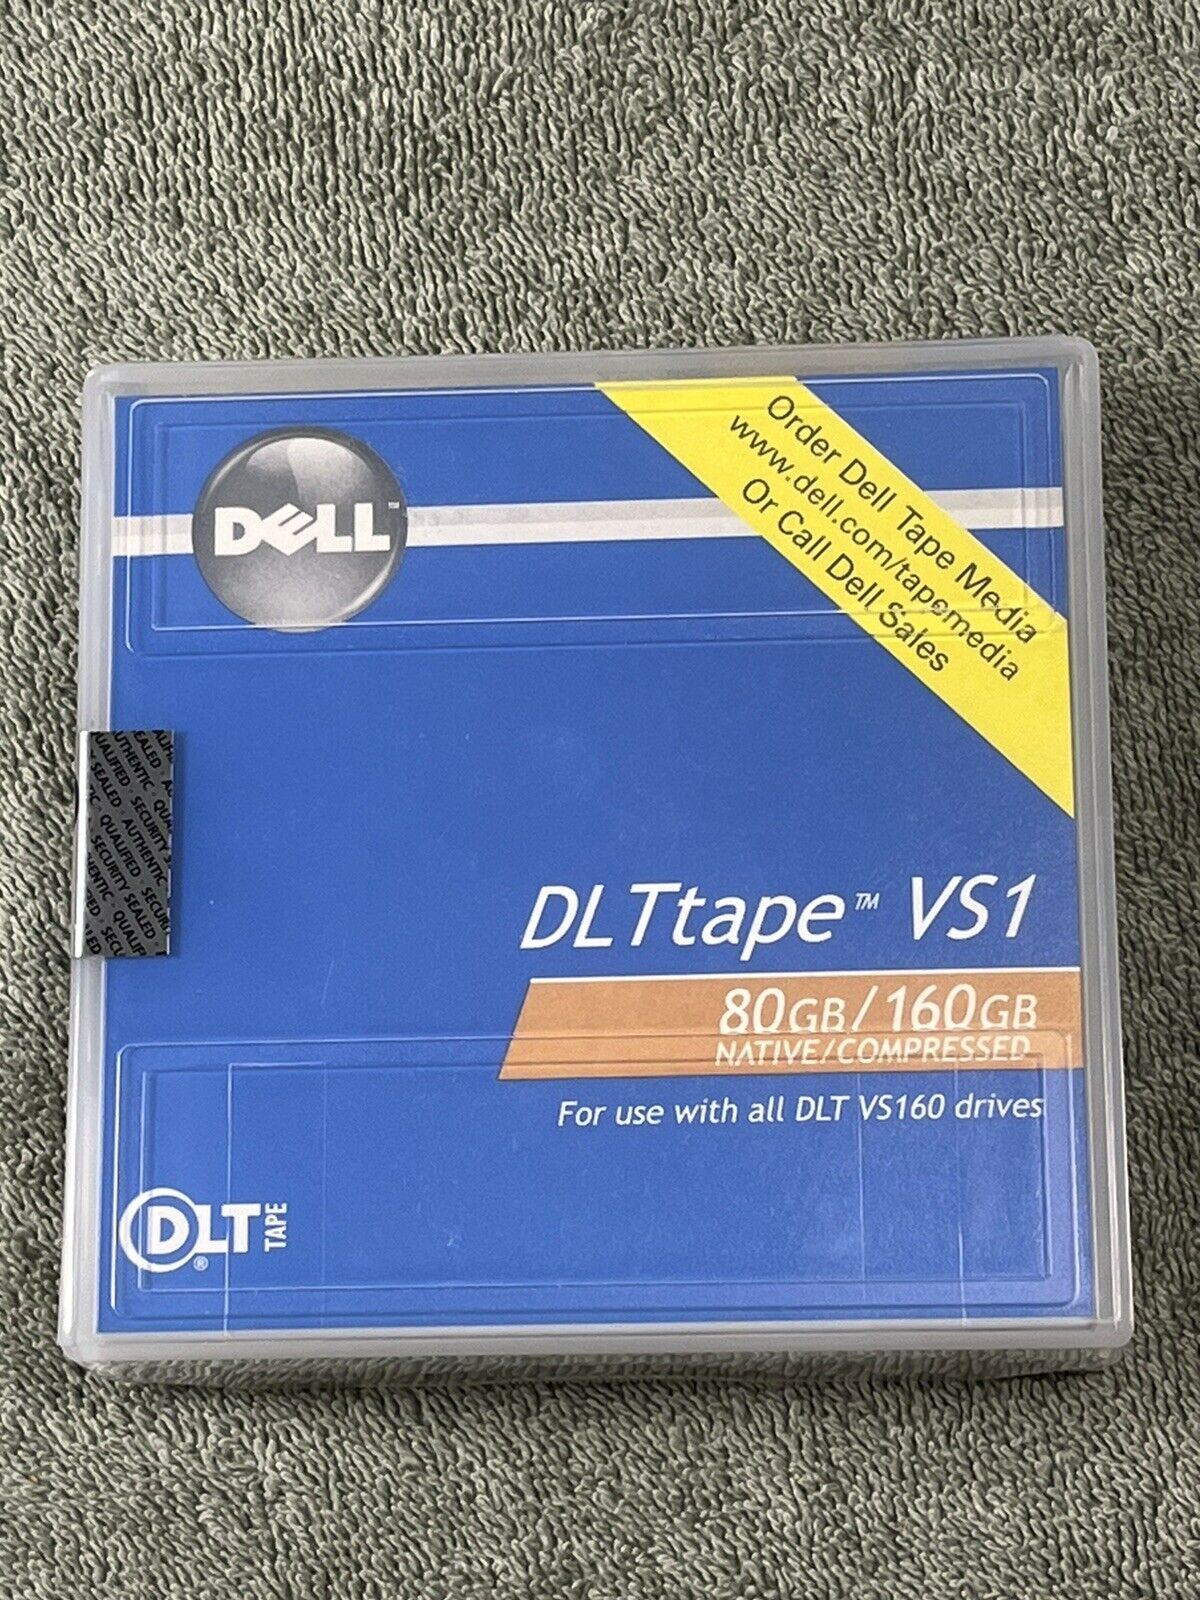 Dell DLT Tape VS1 80/160GB 1/2